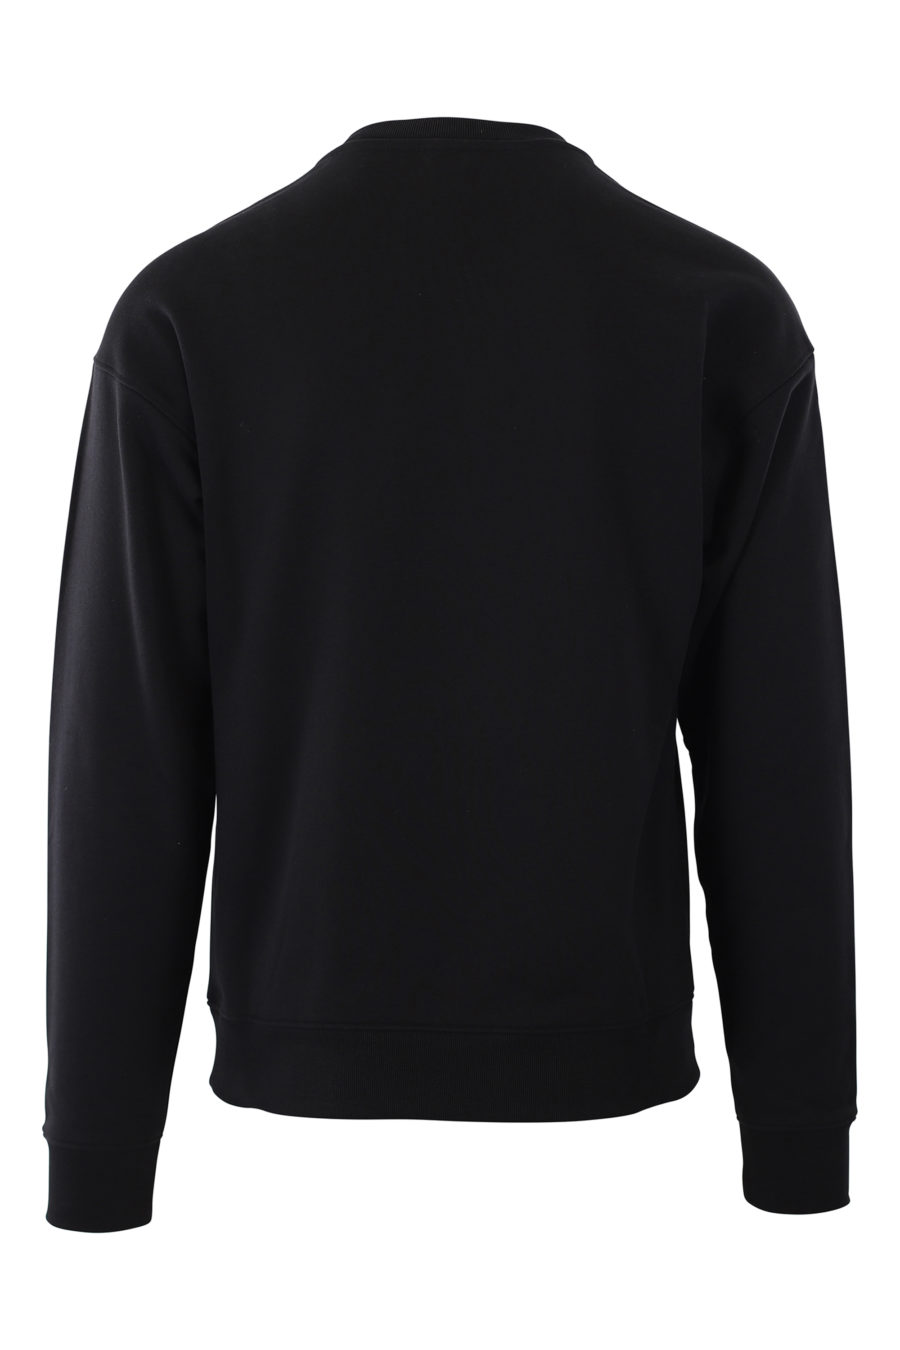 Schwarzes Sweatshirt mit milano "smiley" Logo - IMG 2417